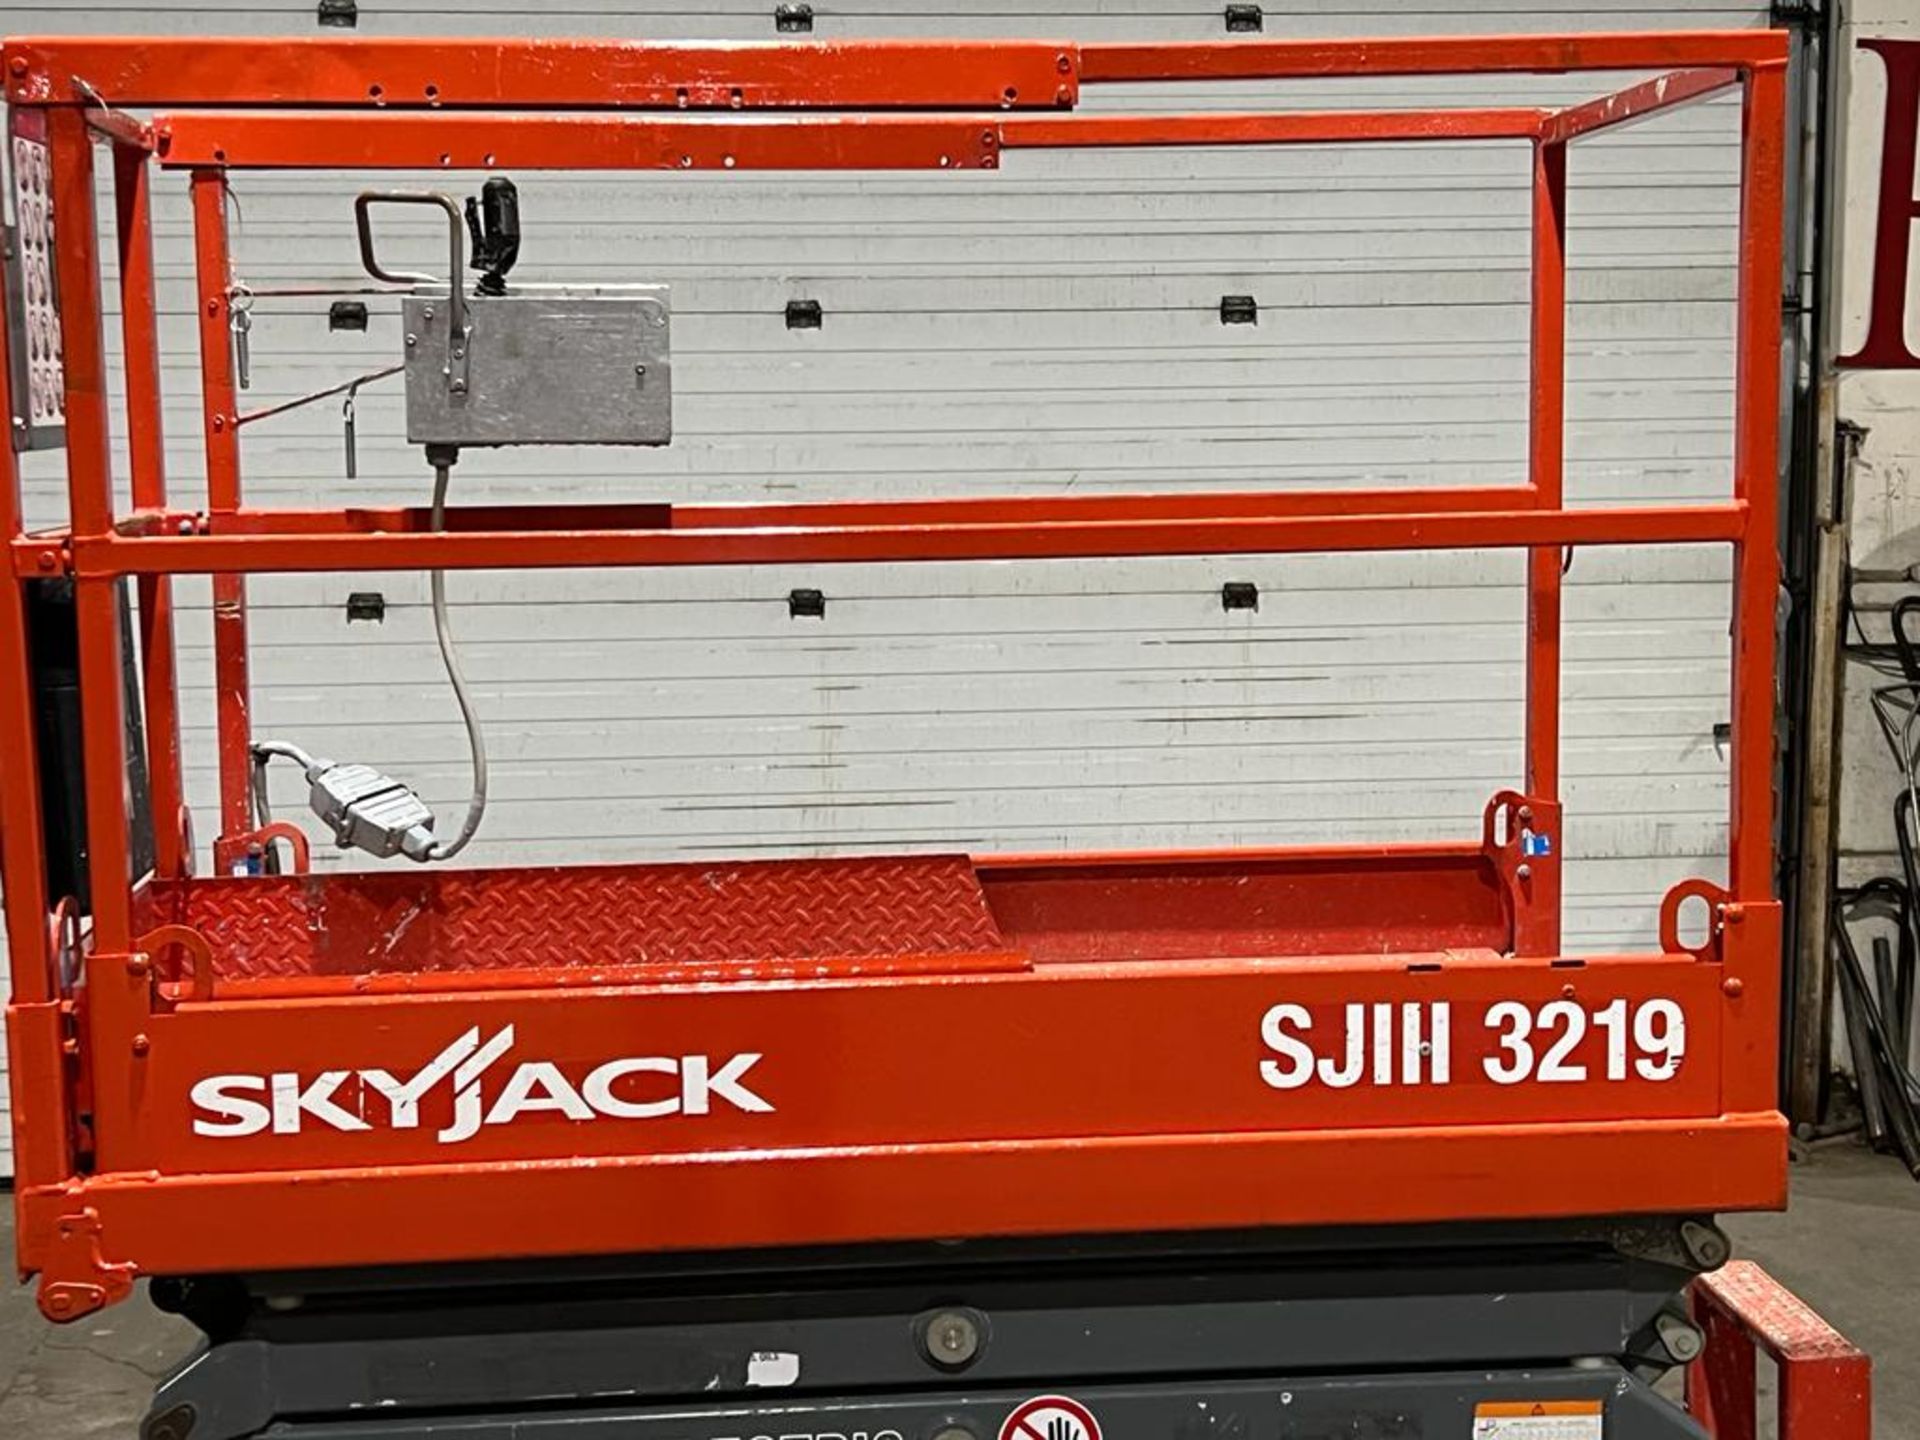 2013 SkyJack III Electric Scissor Lift model 3219 - 19 feet lift, 32 inch width deck with pendant - Image 2 of 4